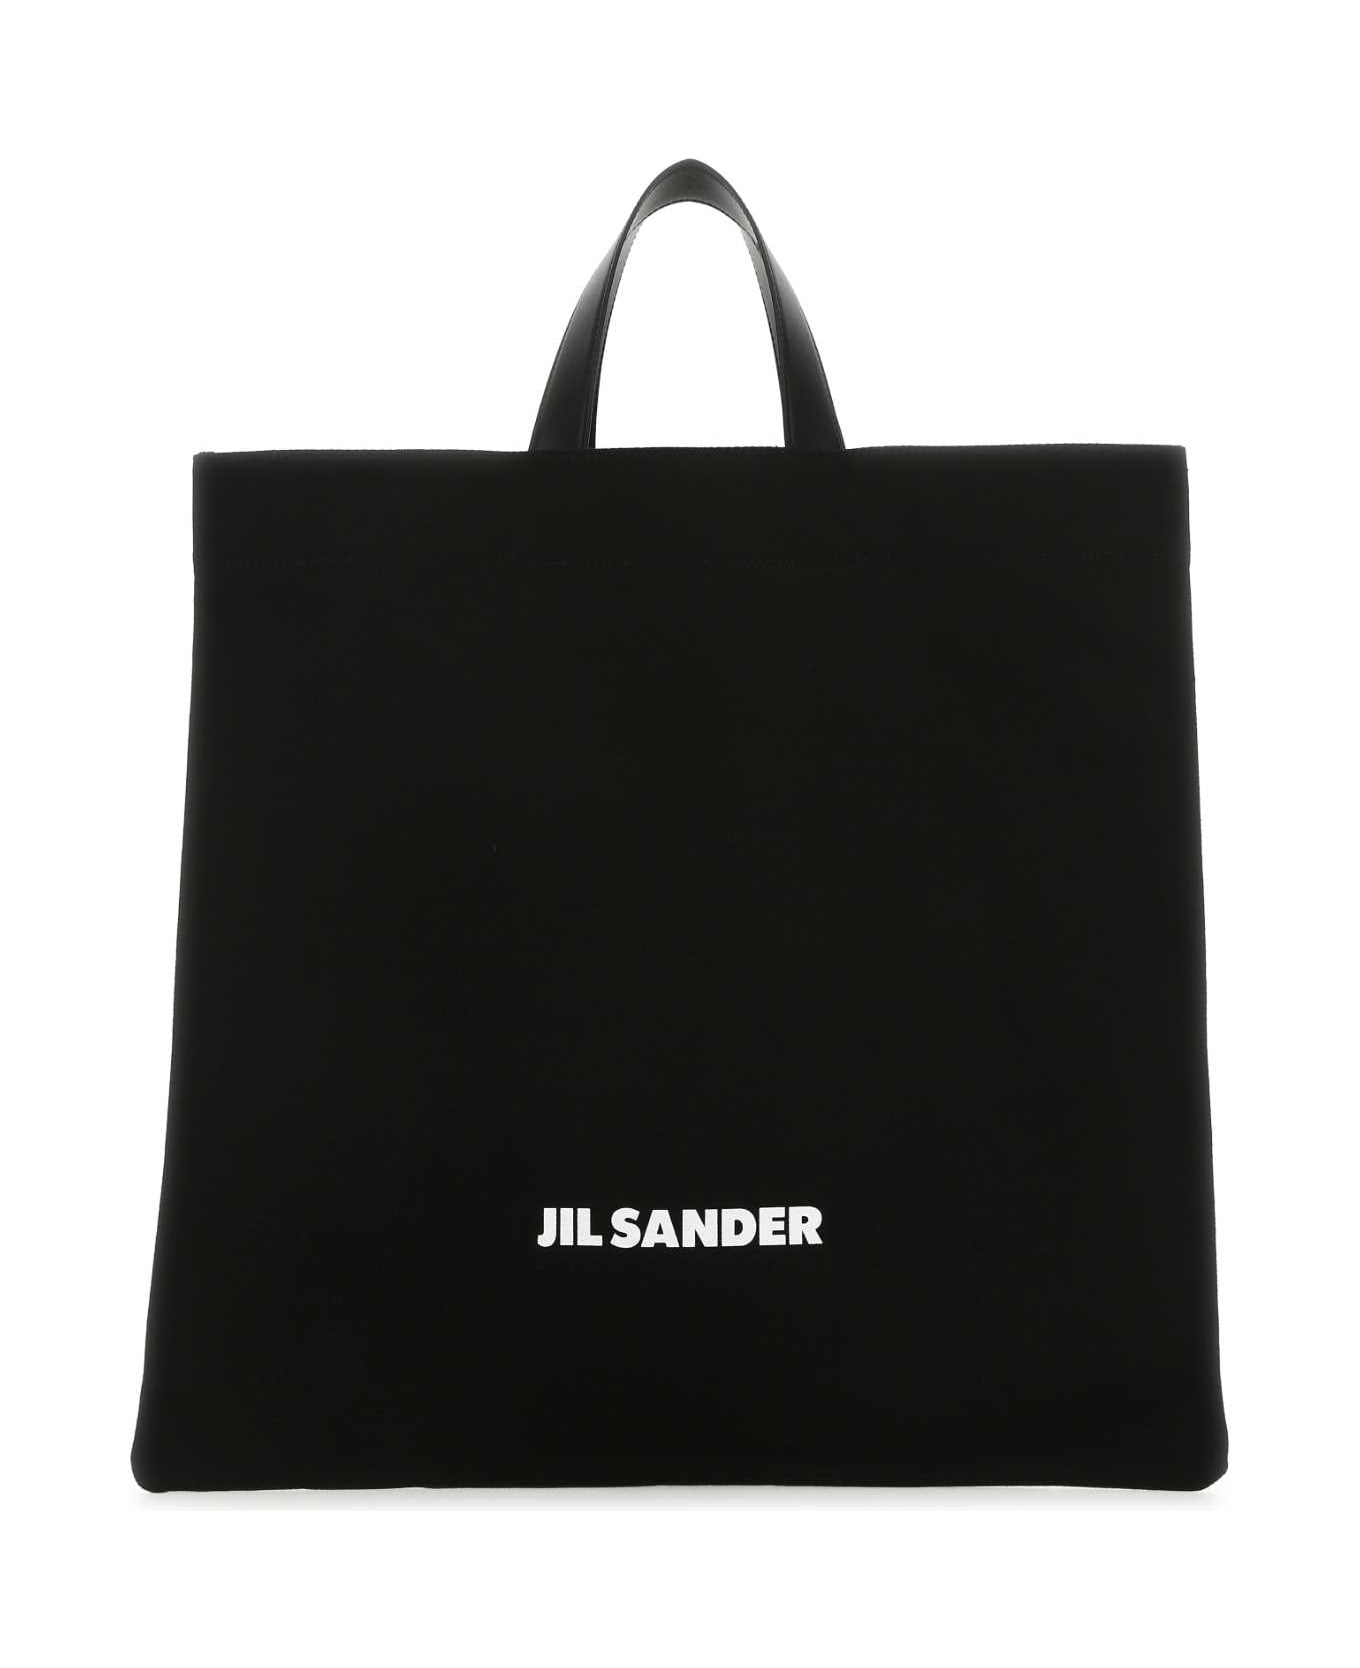 Jil Sander Black Canvas Shopping Bag - 001 トートバッグ